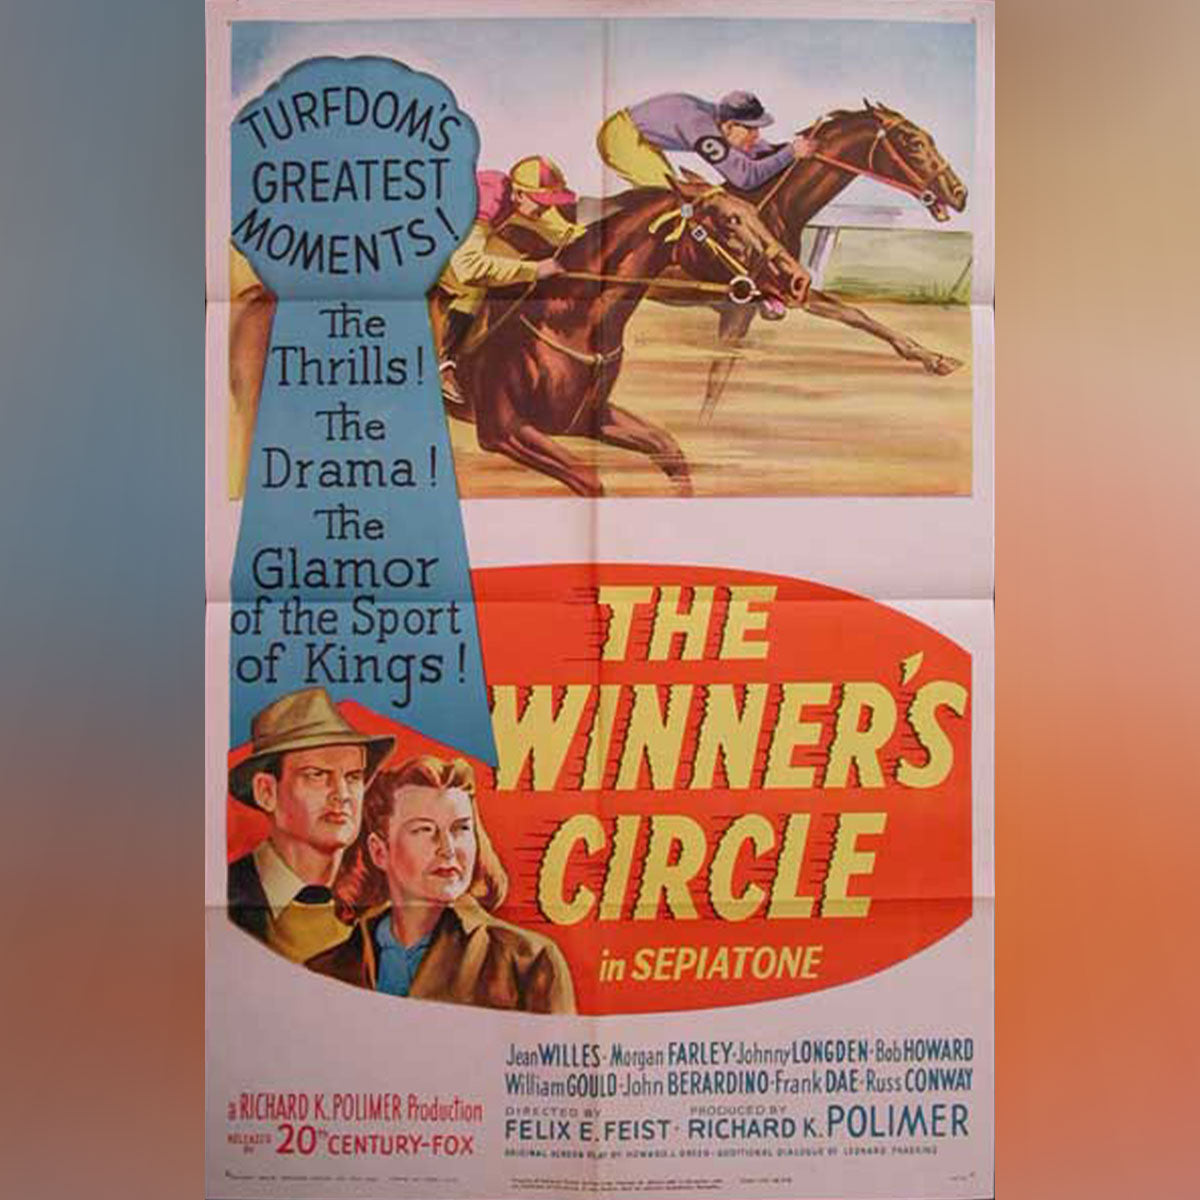 Winner's Circle, The (1948)